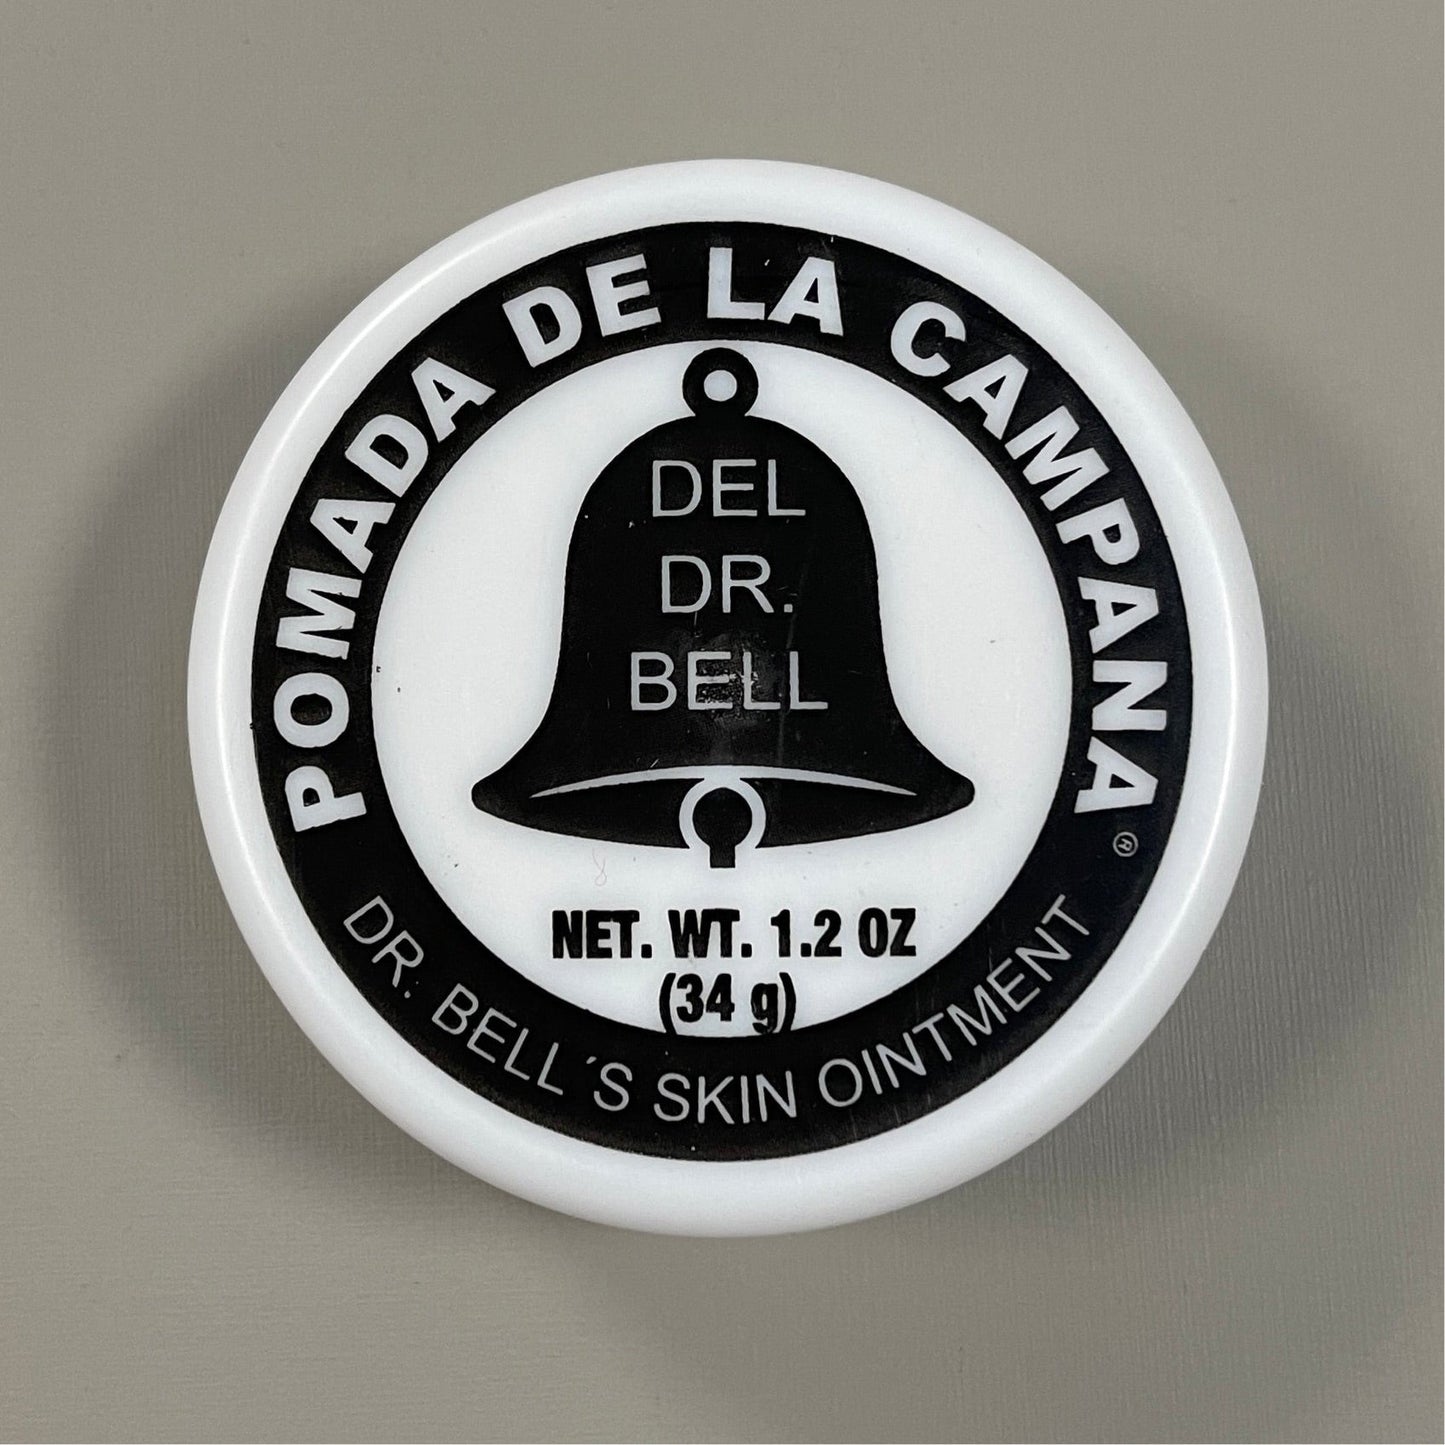 ZA@ DR. BELL’S POMADA DE LA CAMPANA (15-Pack) Skin Ointment Sz 1.2 oz BBD 12/23 (New)